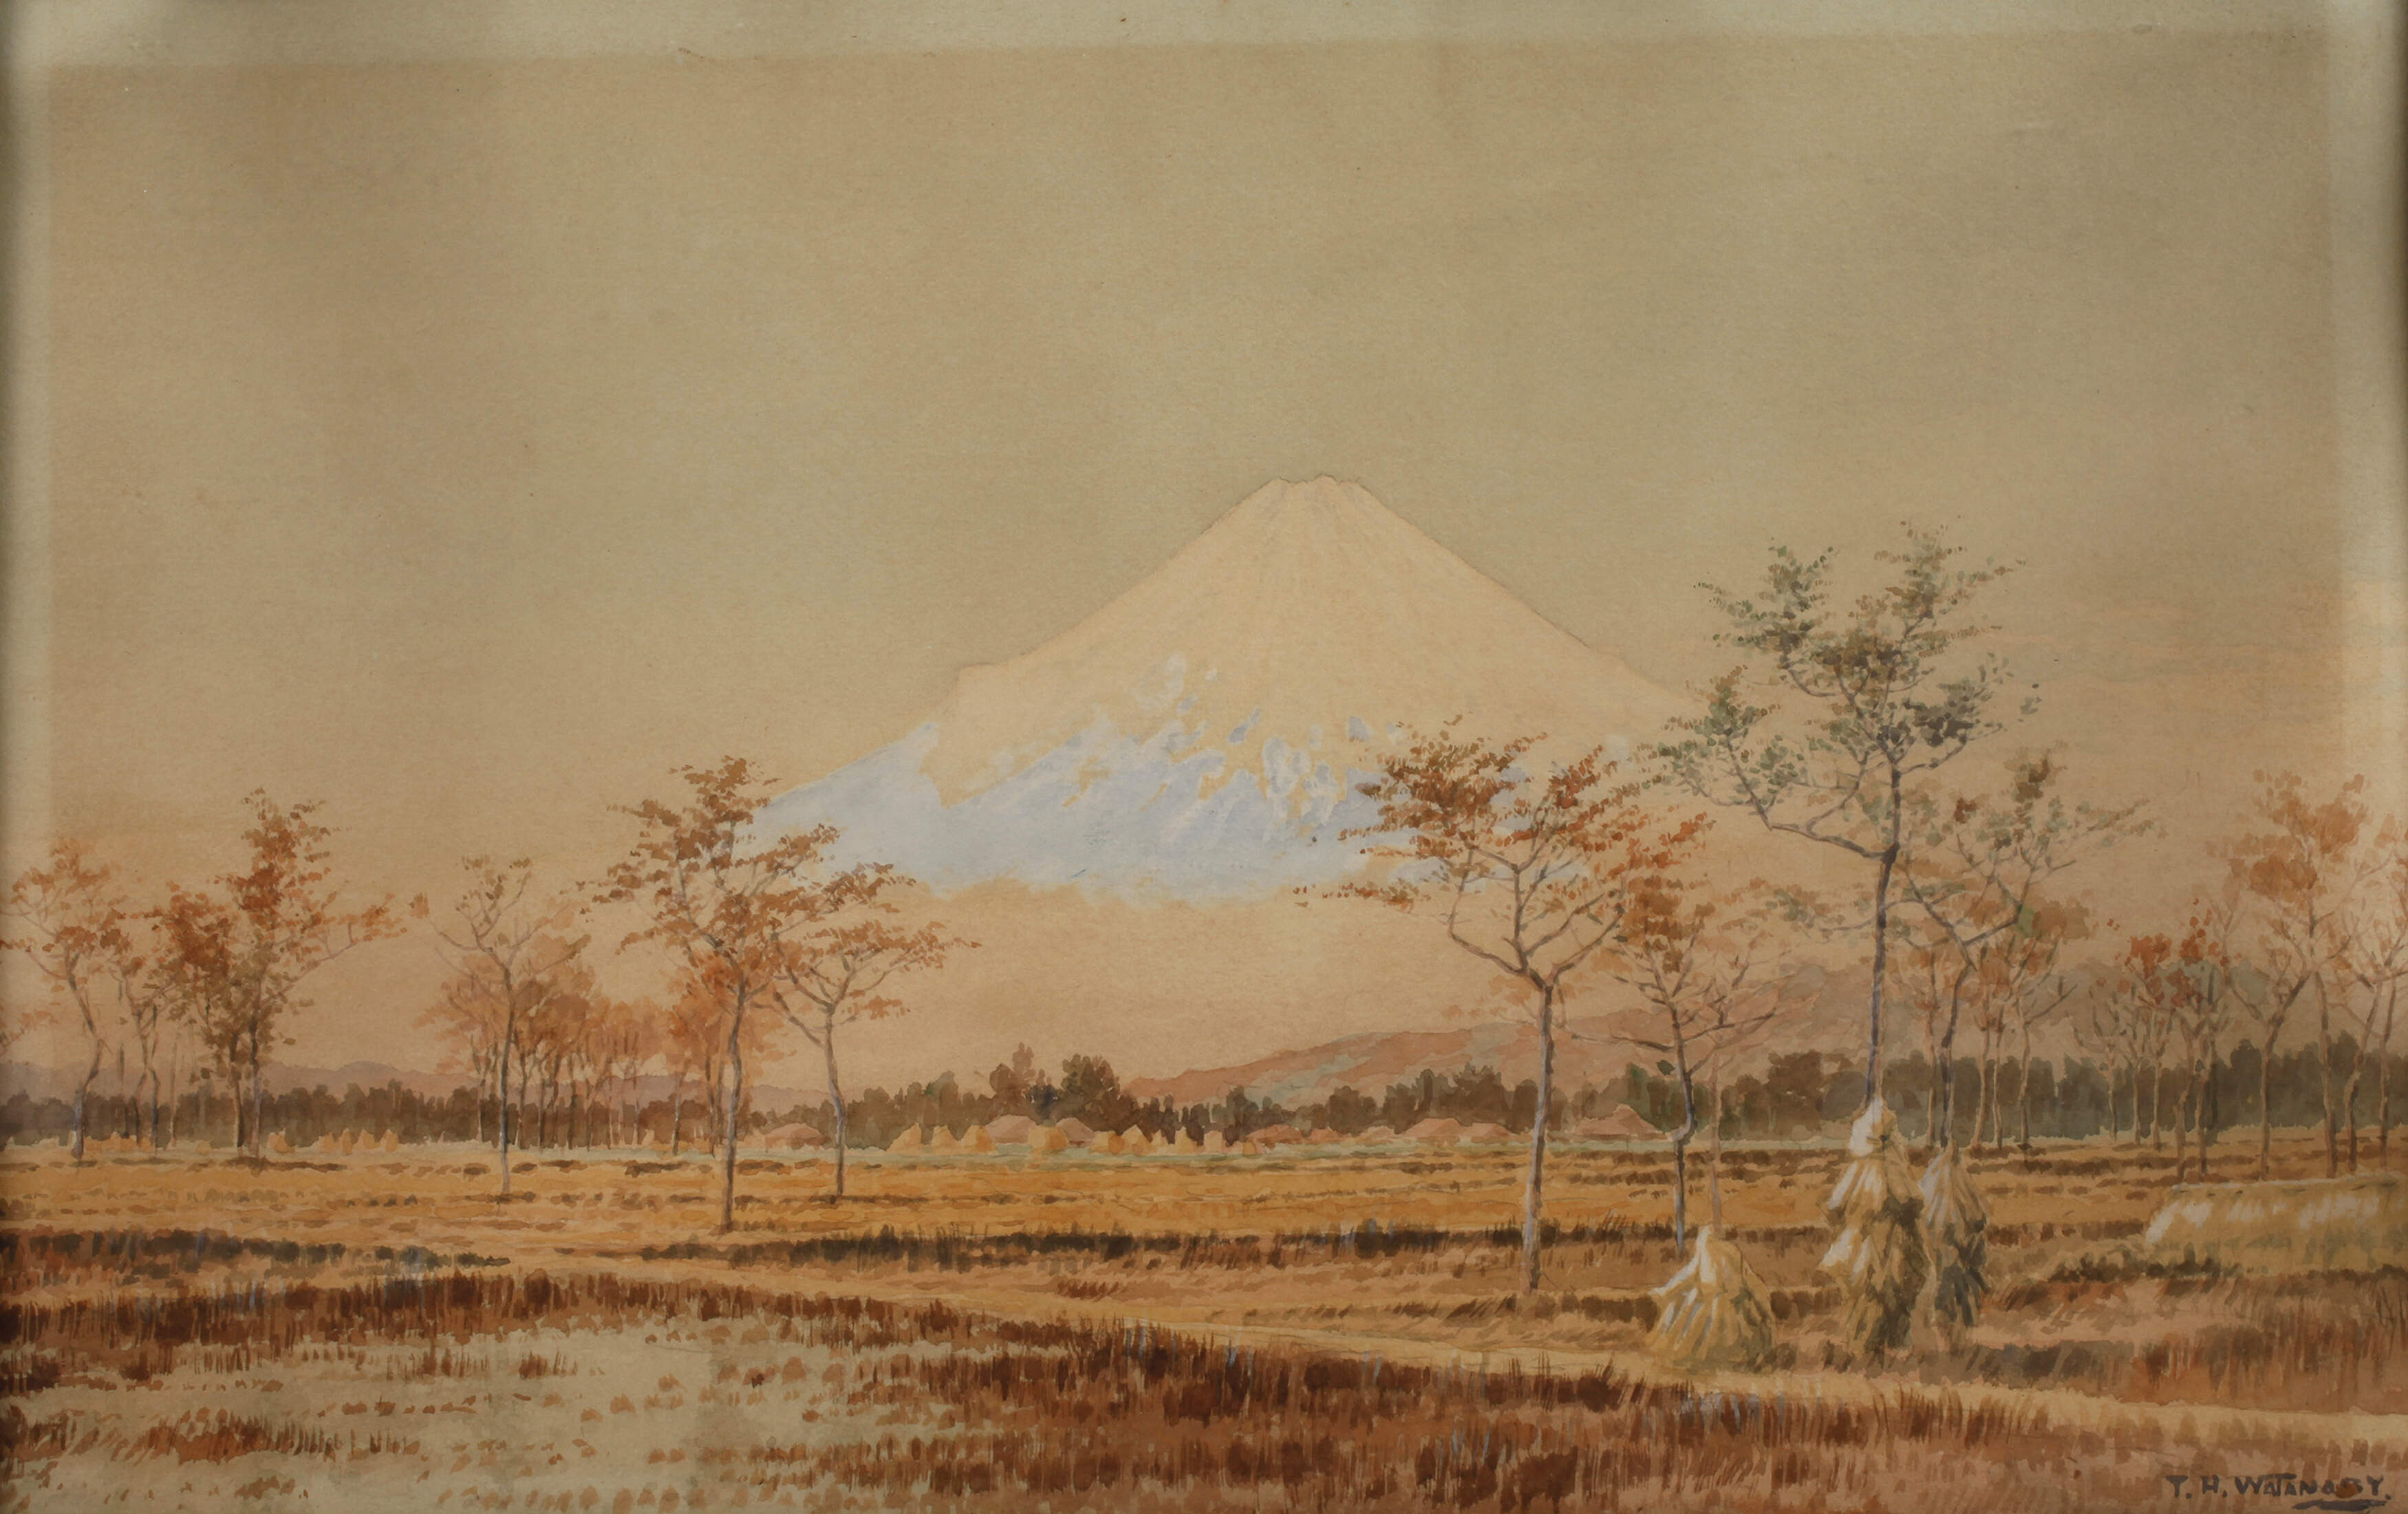 T. H. Watanaby, Blick auf den Fujiyama